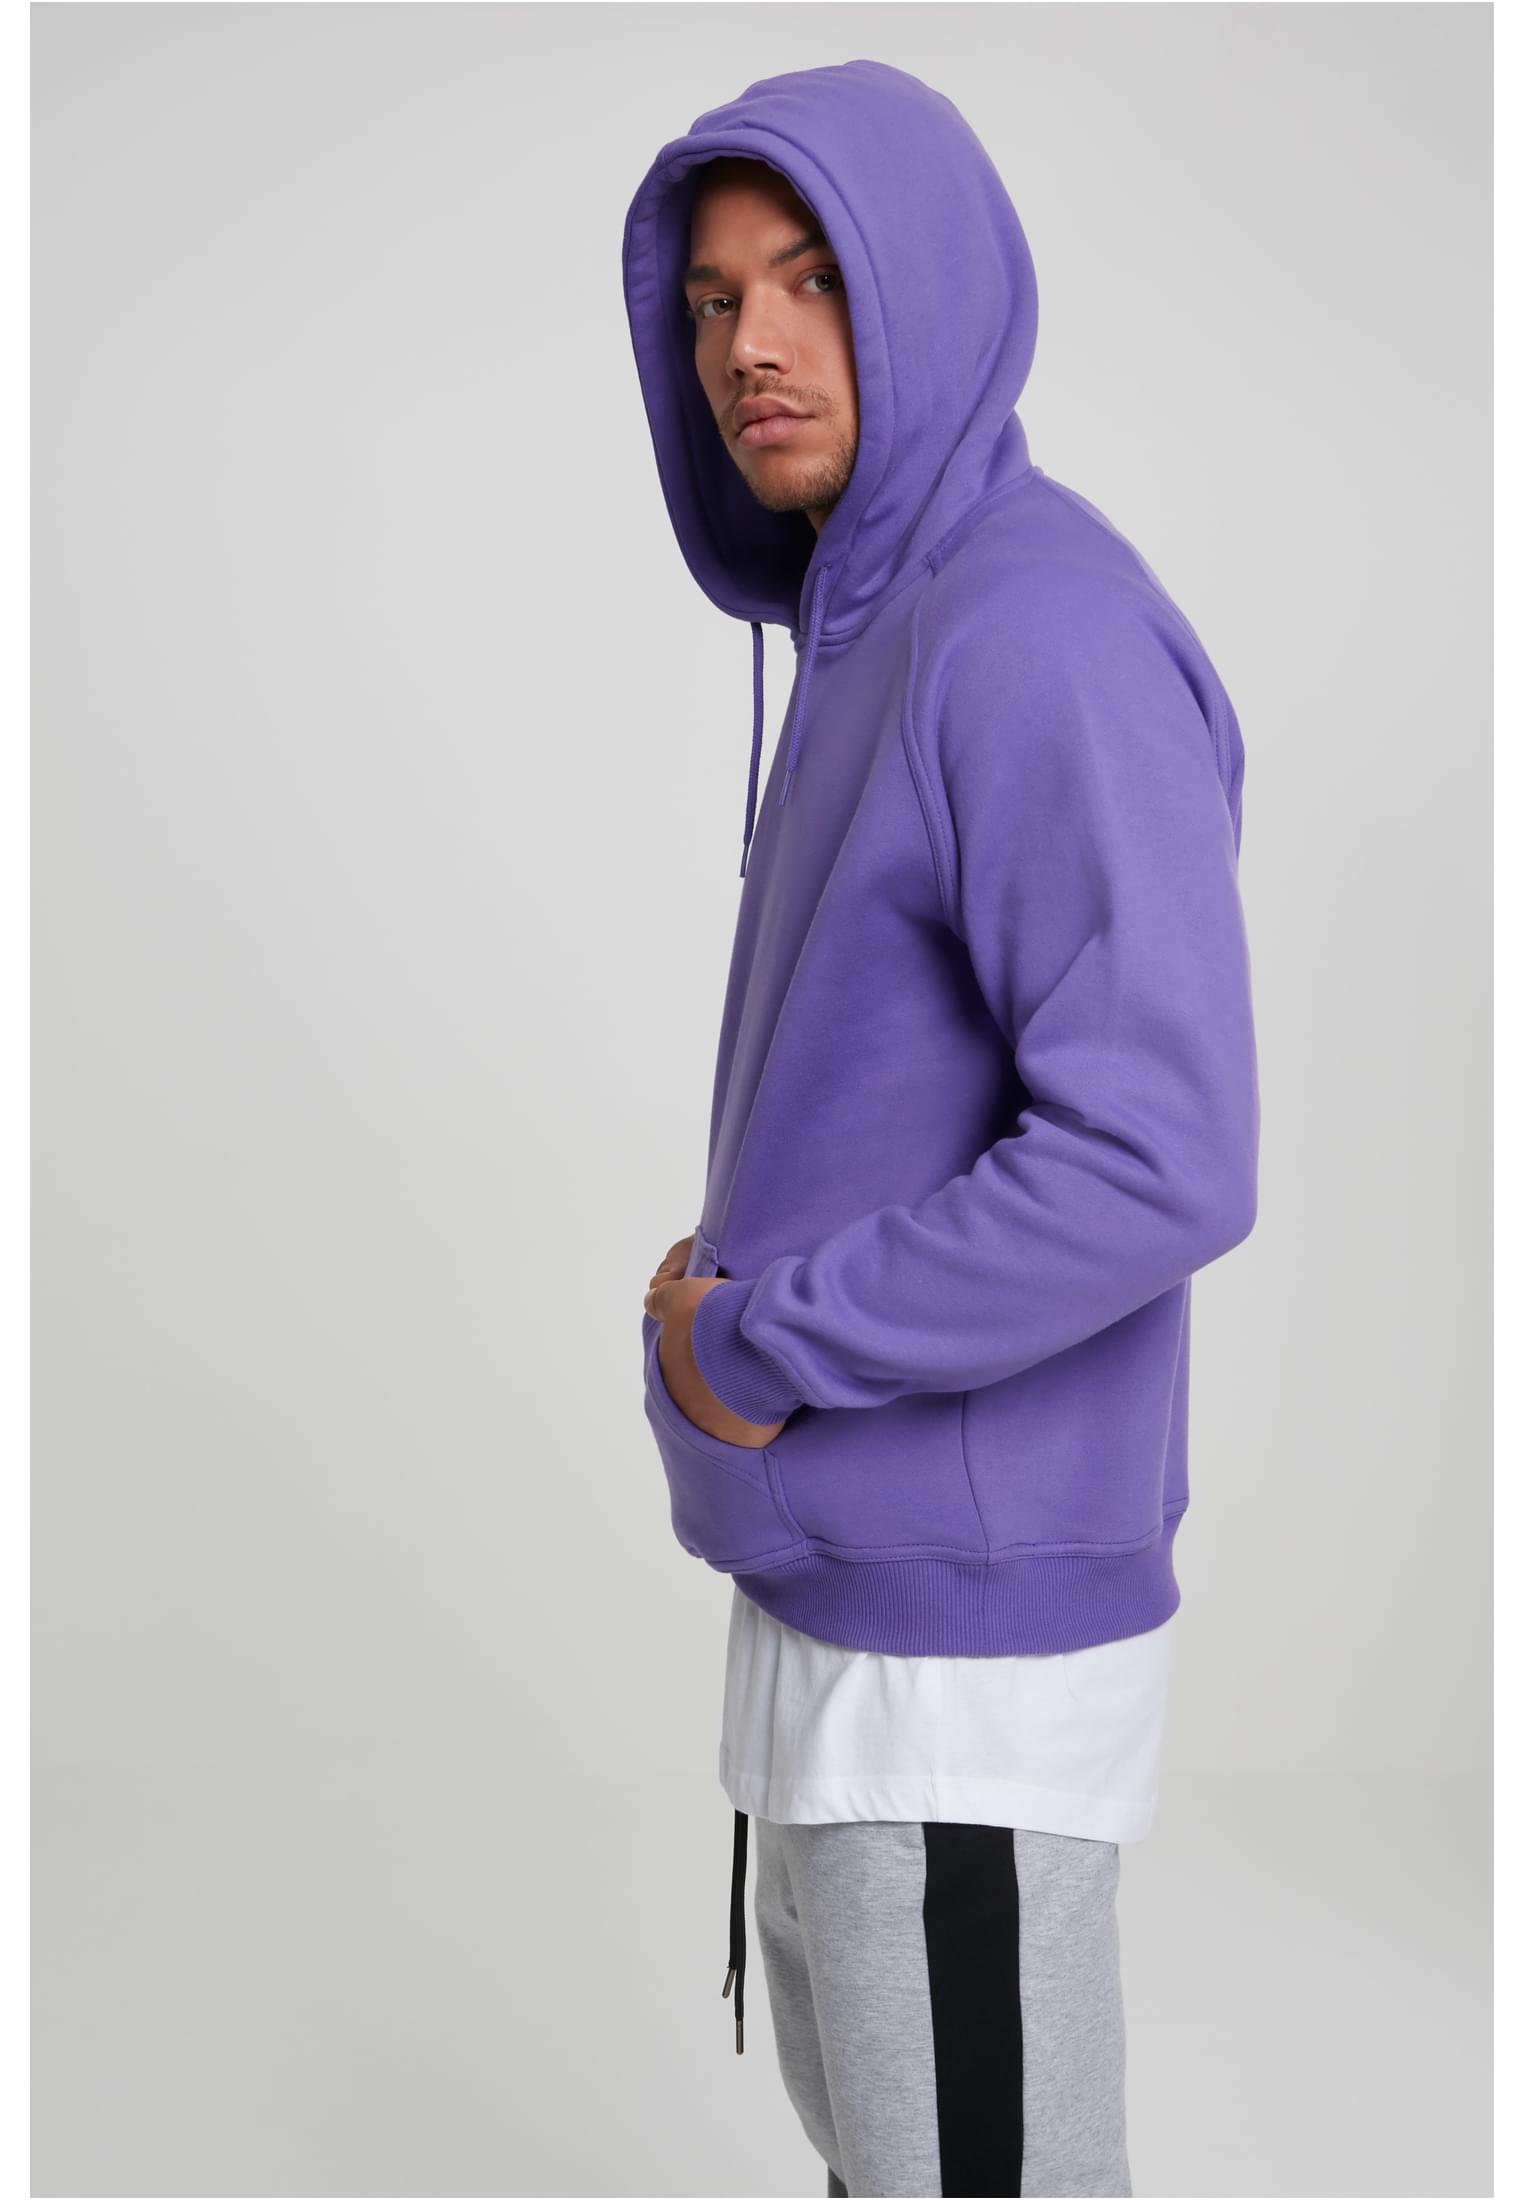 Plus Size Blank Hoody in Farbe ultraviolet